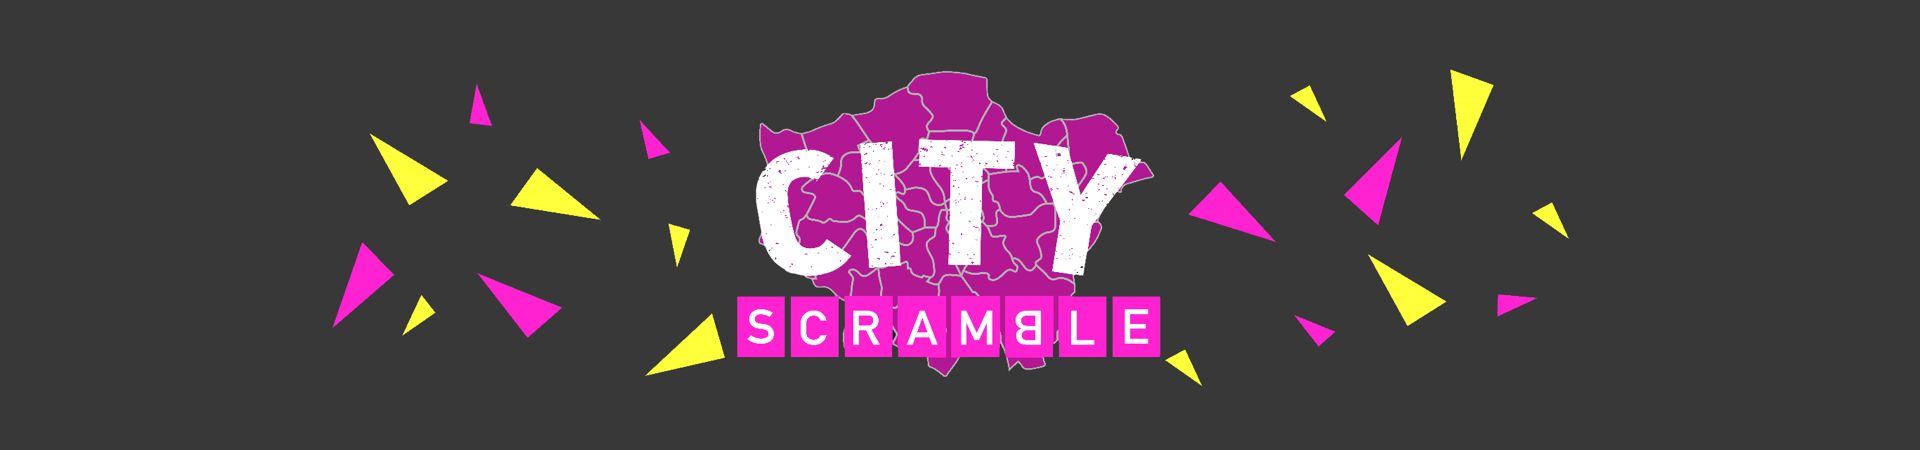 City Scramble London, London, England, United Kingdom